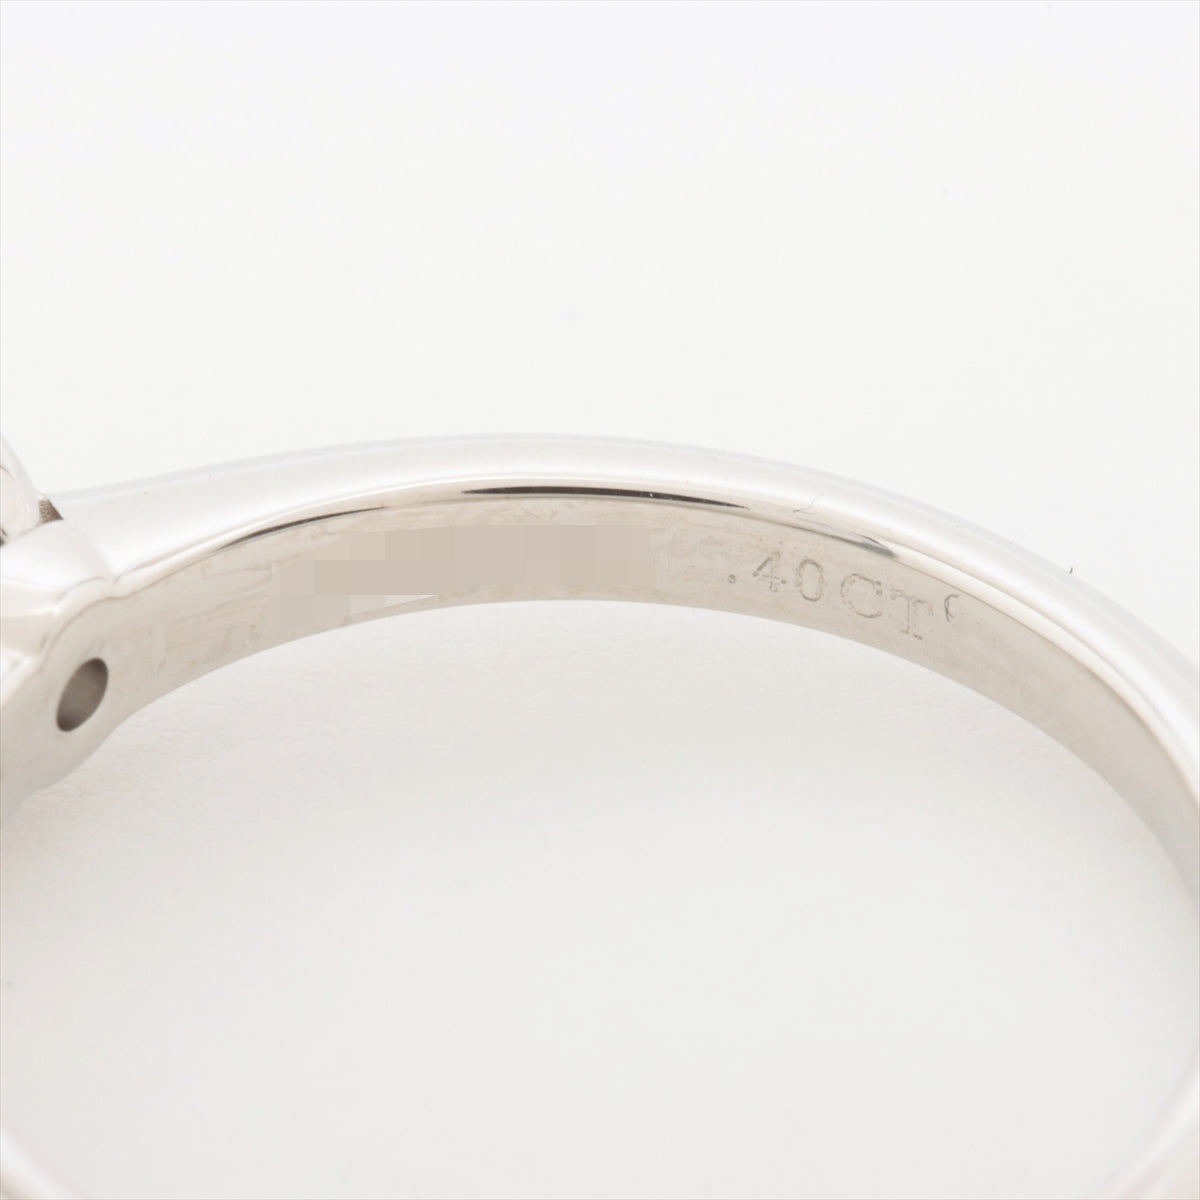 Tiffany Solitaire Diamond Ring Pt950 3.5g 0.40 H VVS1 EX NONE Resized